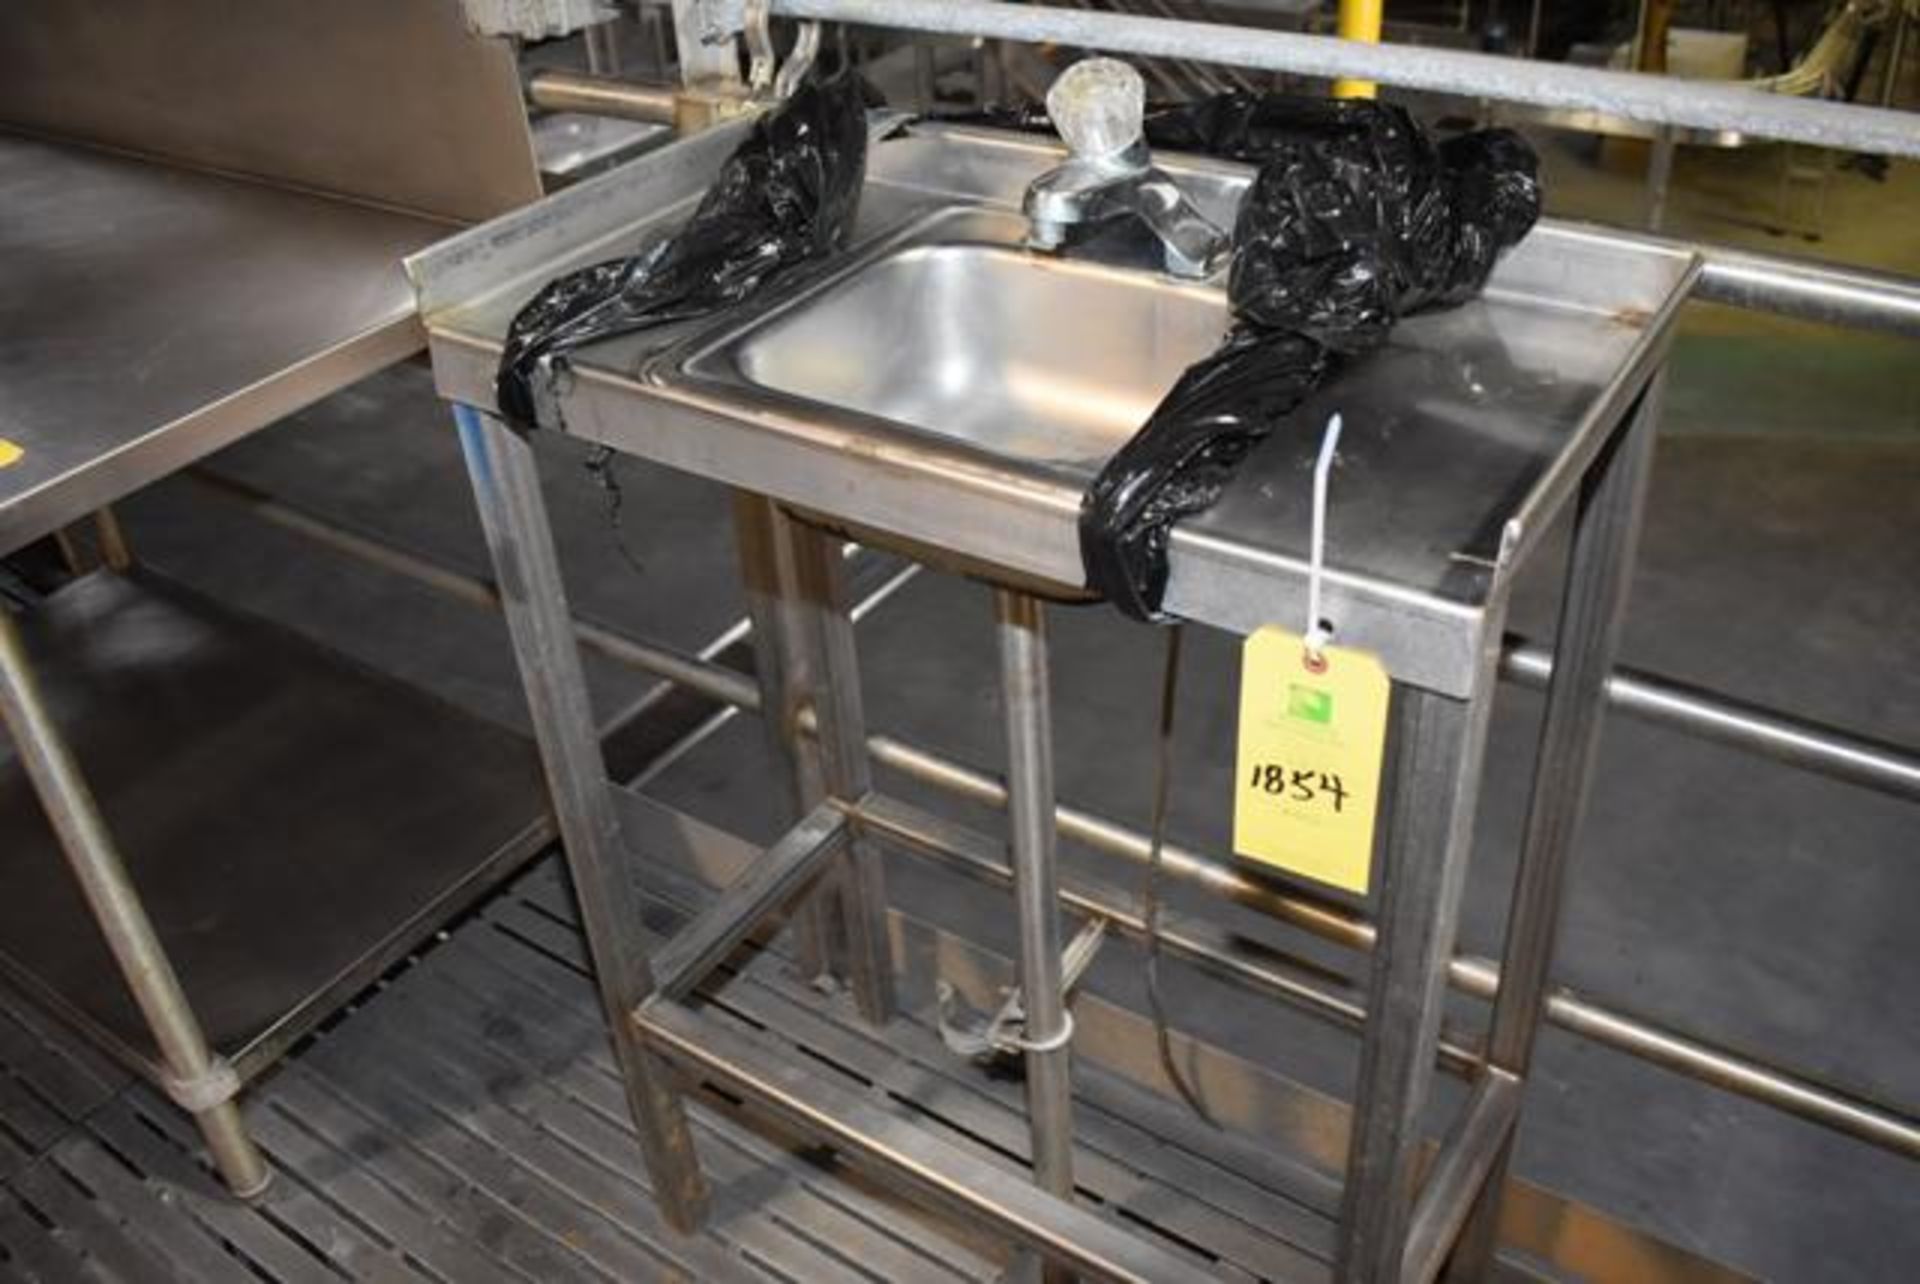 Stainless Steel Sink, Single Basin, 30" x 15", SS Leg Base, RIGGING FEE: $25